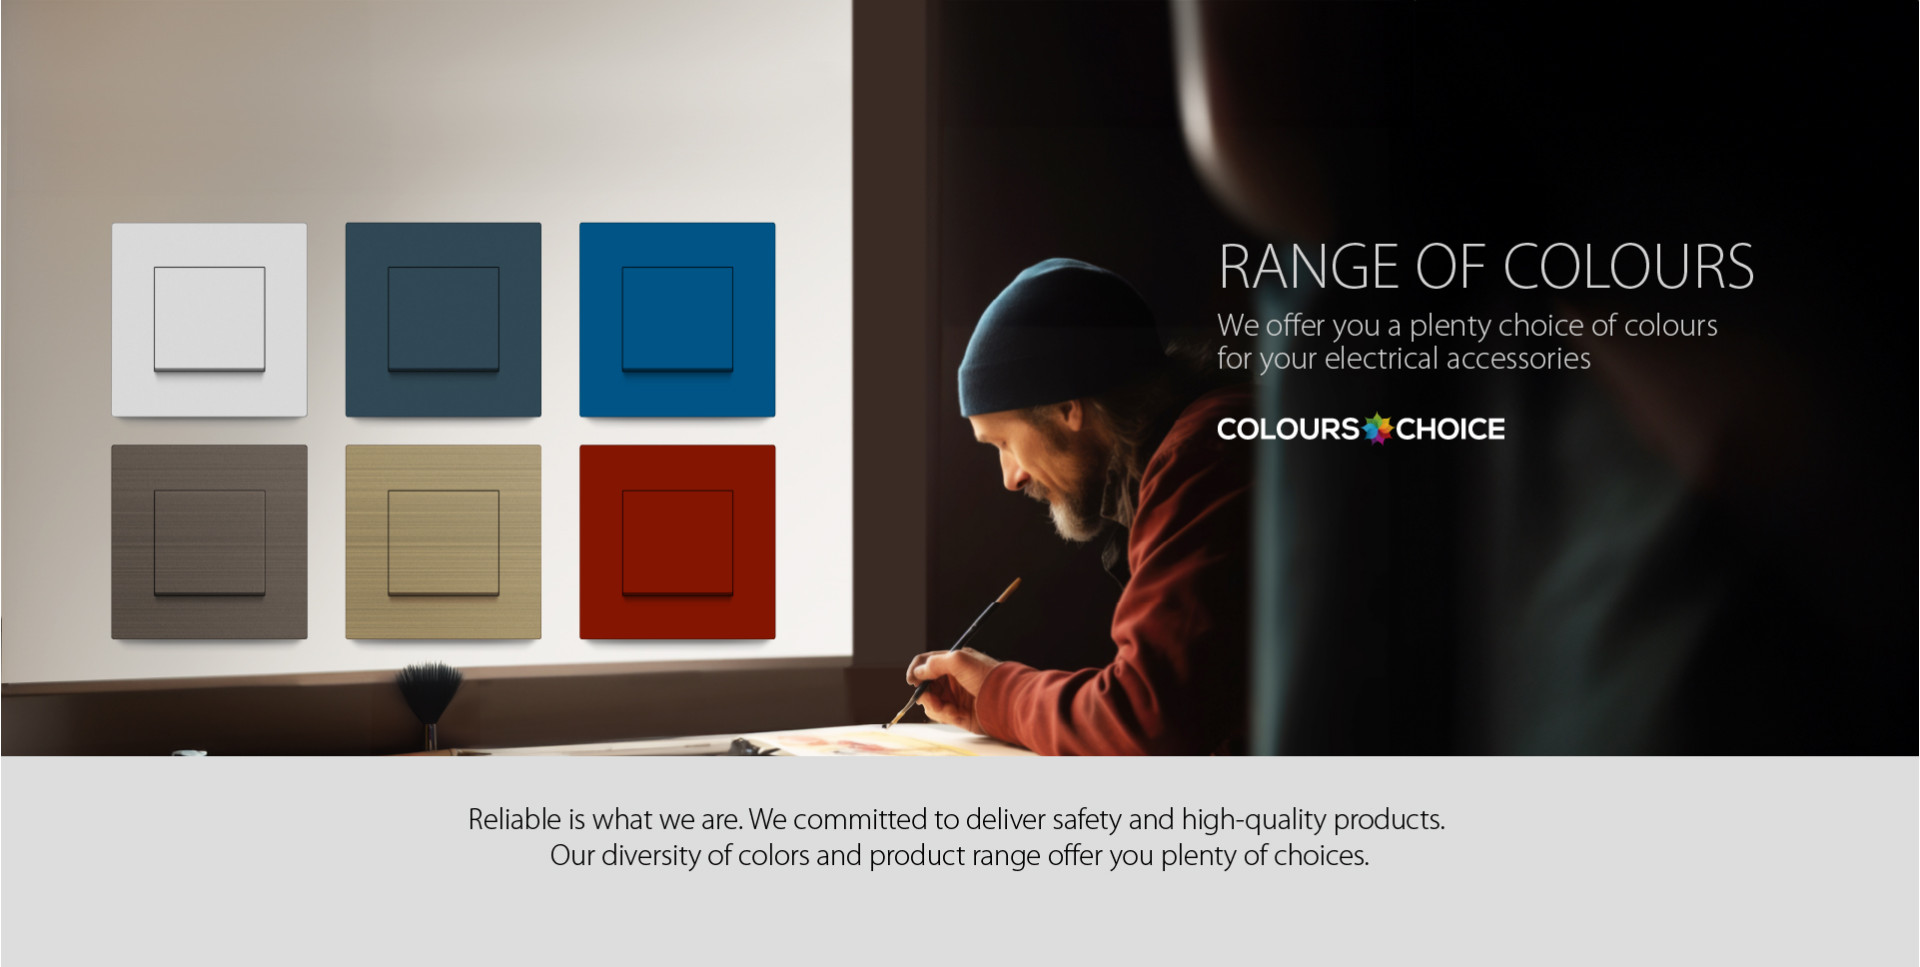 Range of Colours